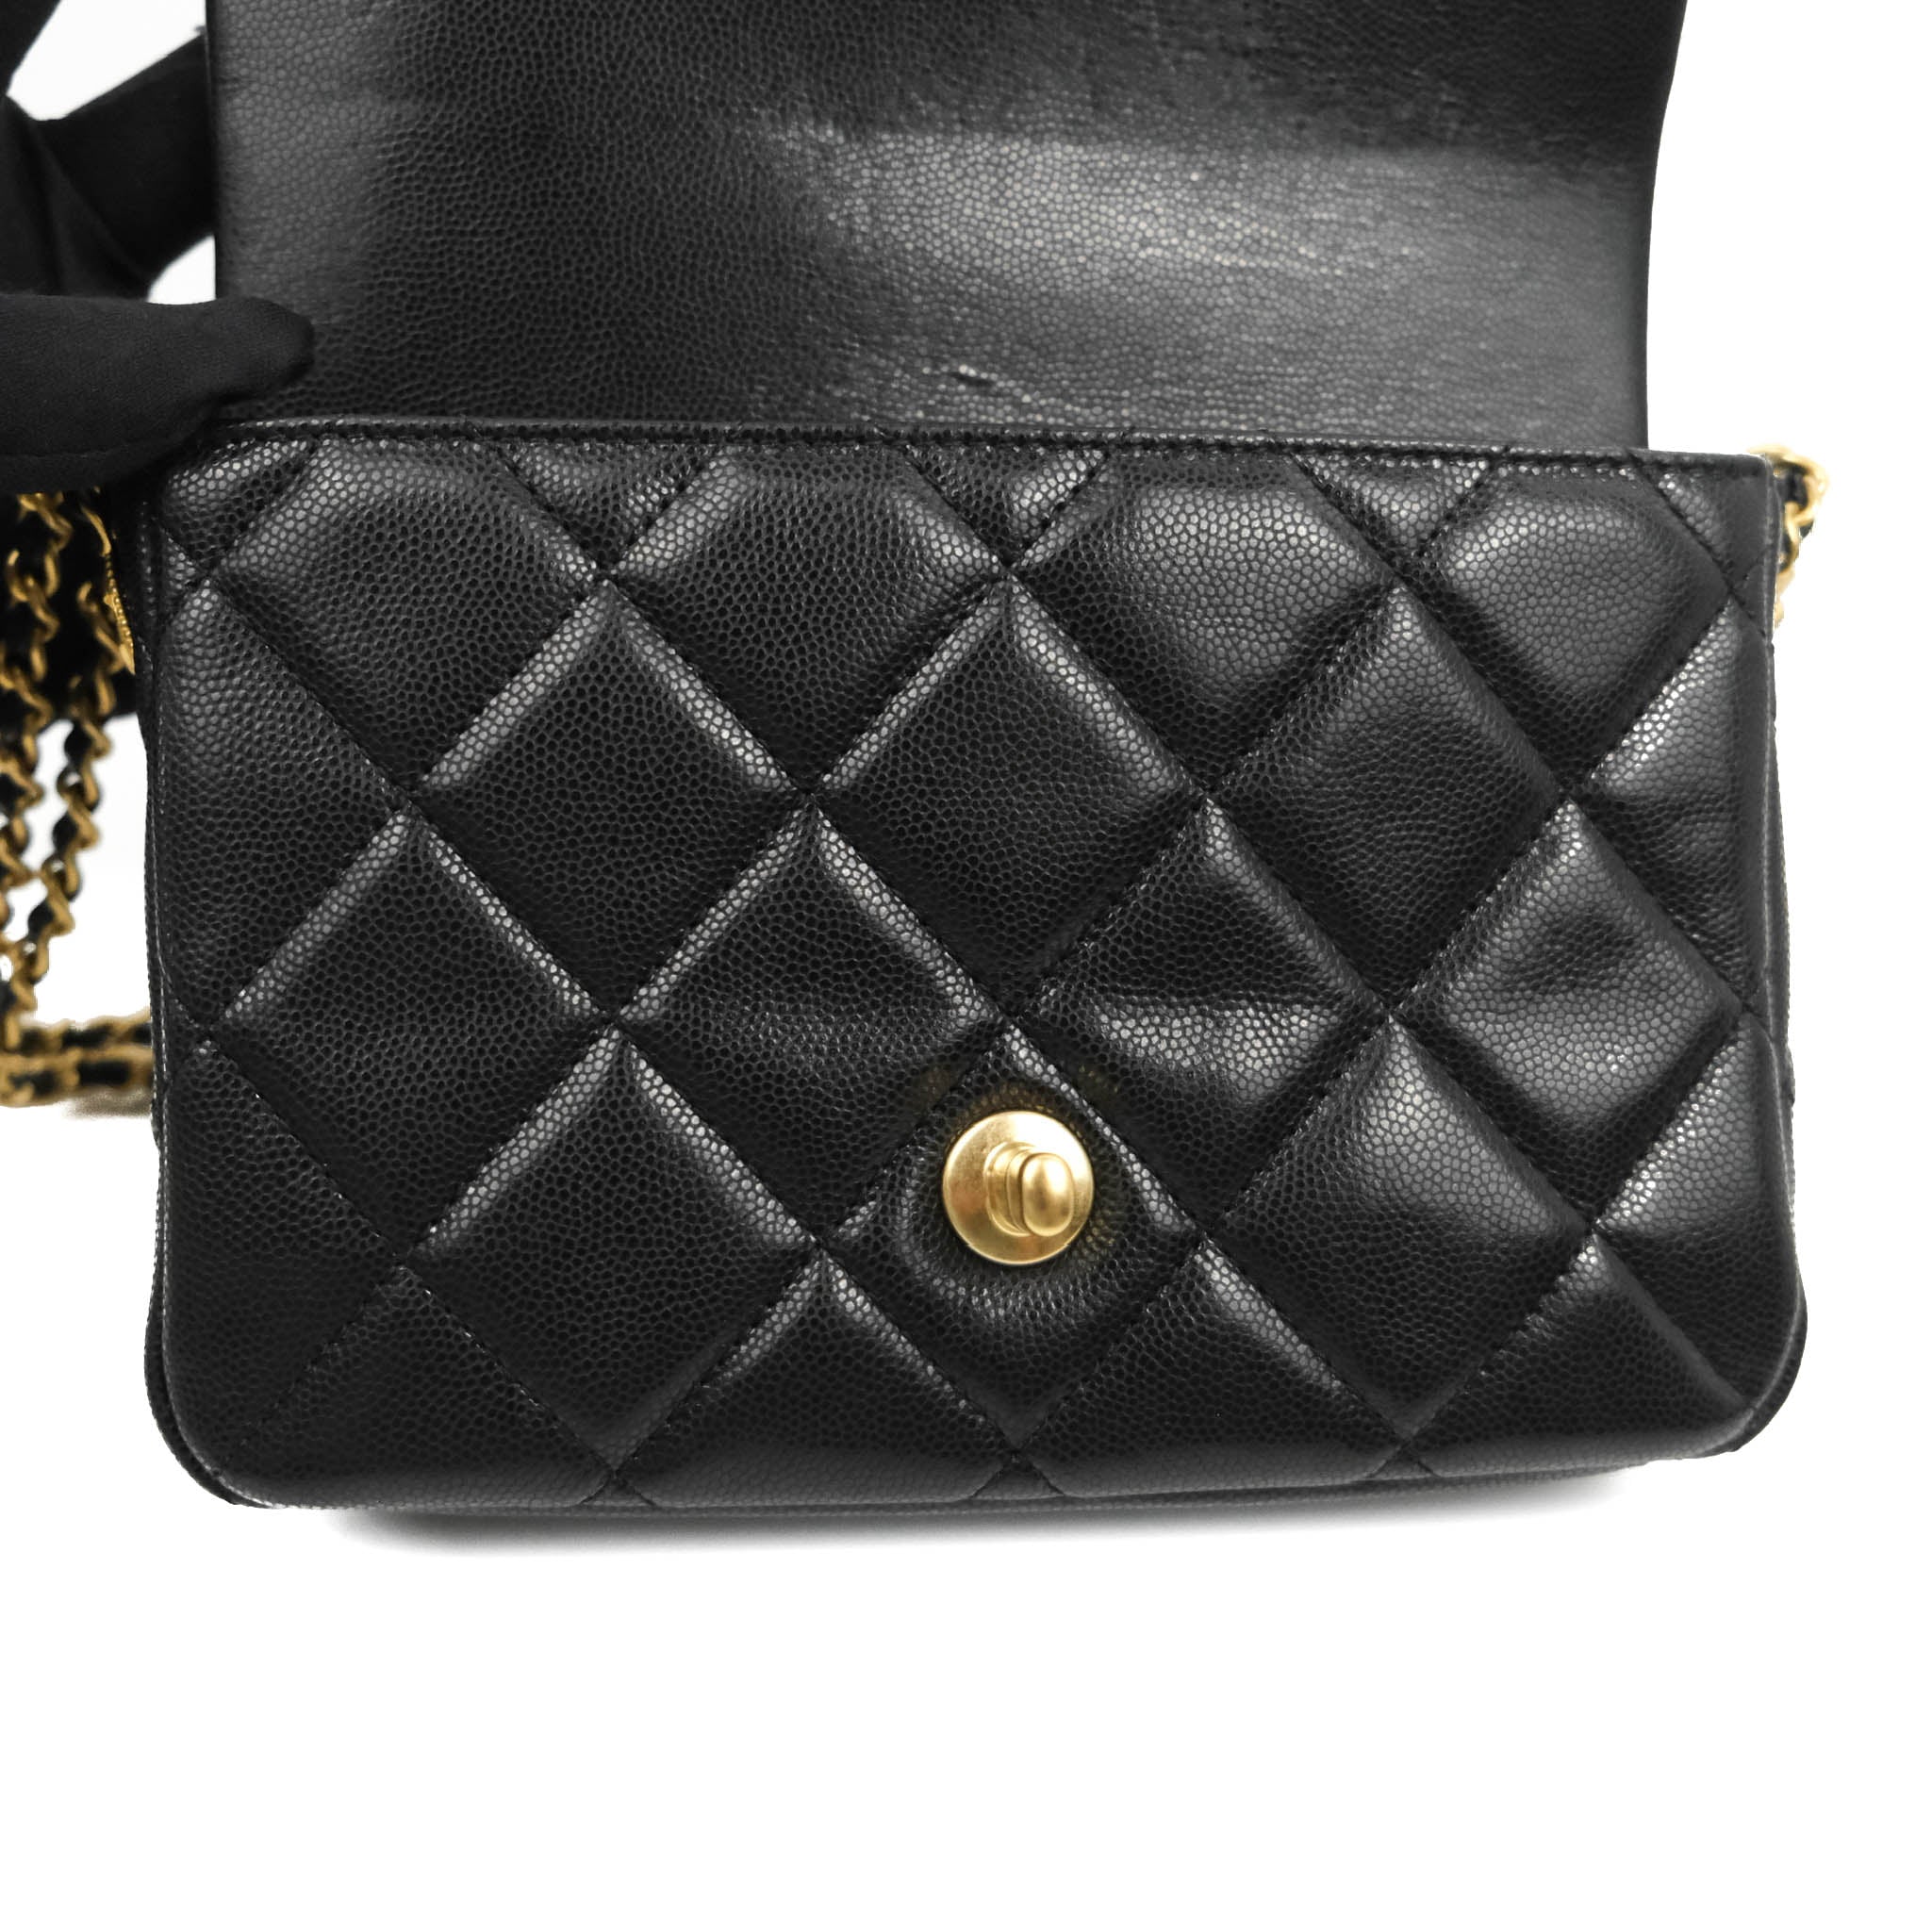 MIB 100%AUTH CHANEL 22P Black Denim Chanel Scripts Mini Flap Bag Goldtone  HDW